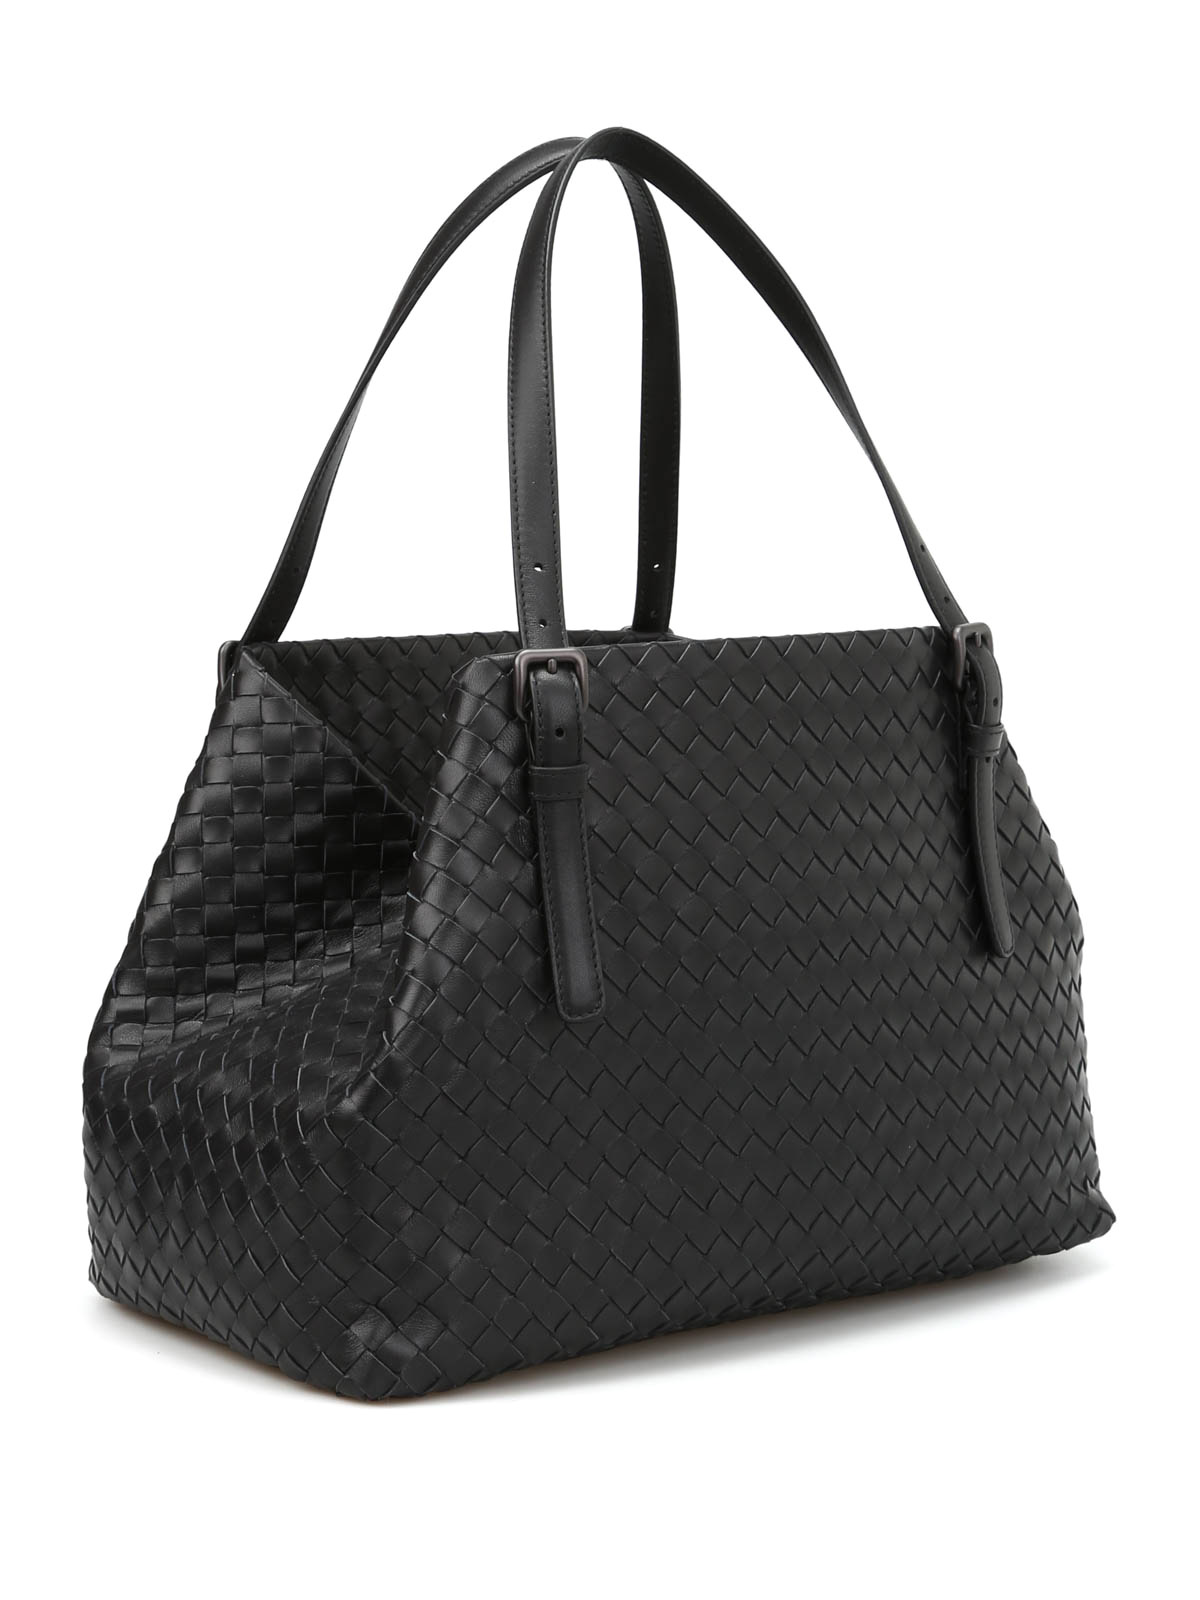 Bottega Veneta Intrecciato Leather Handbags | semashow.com